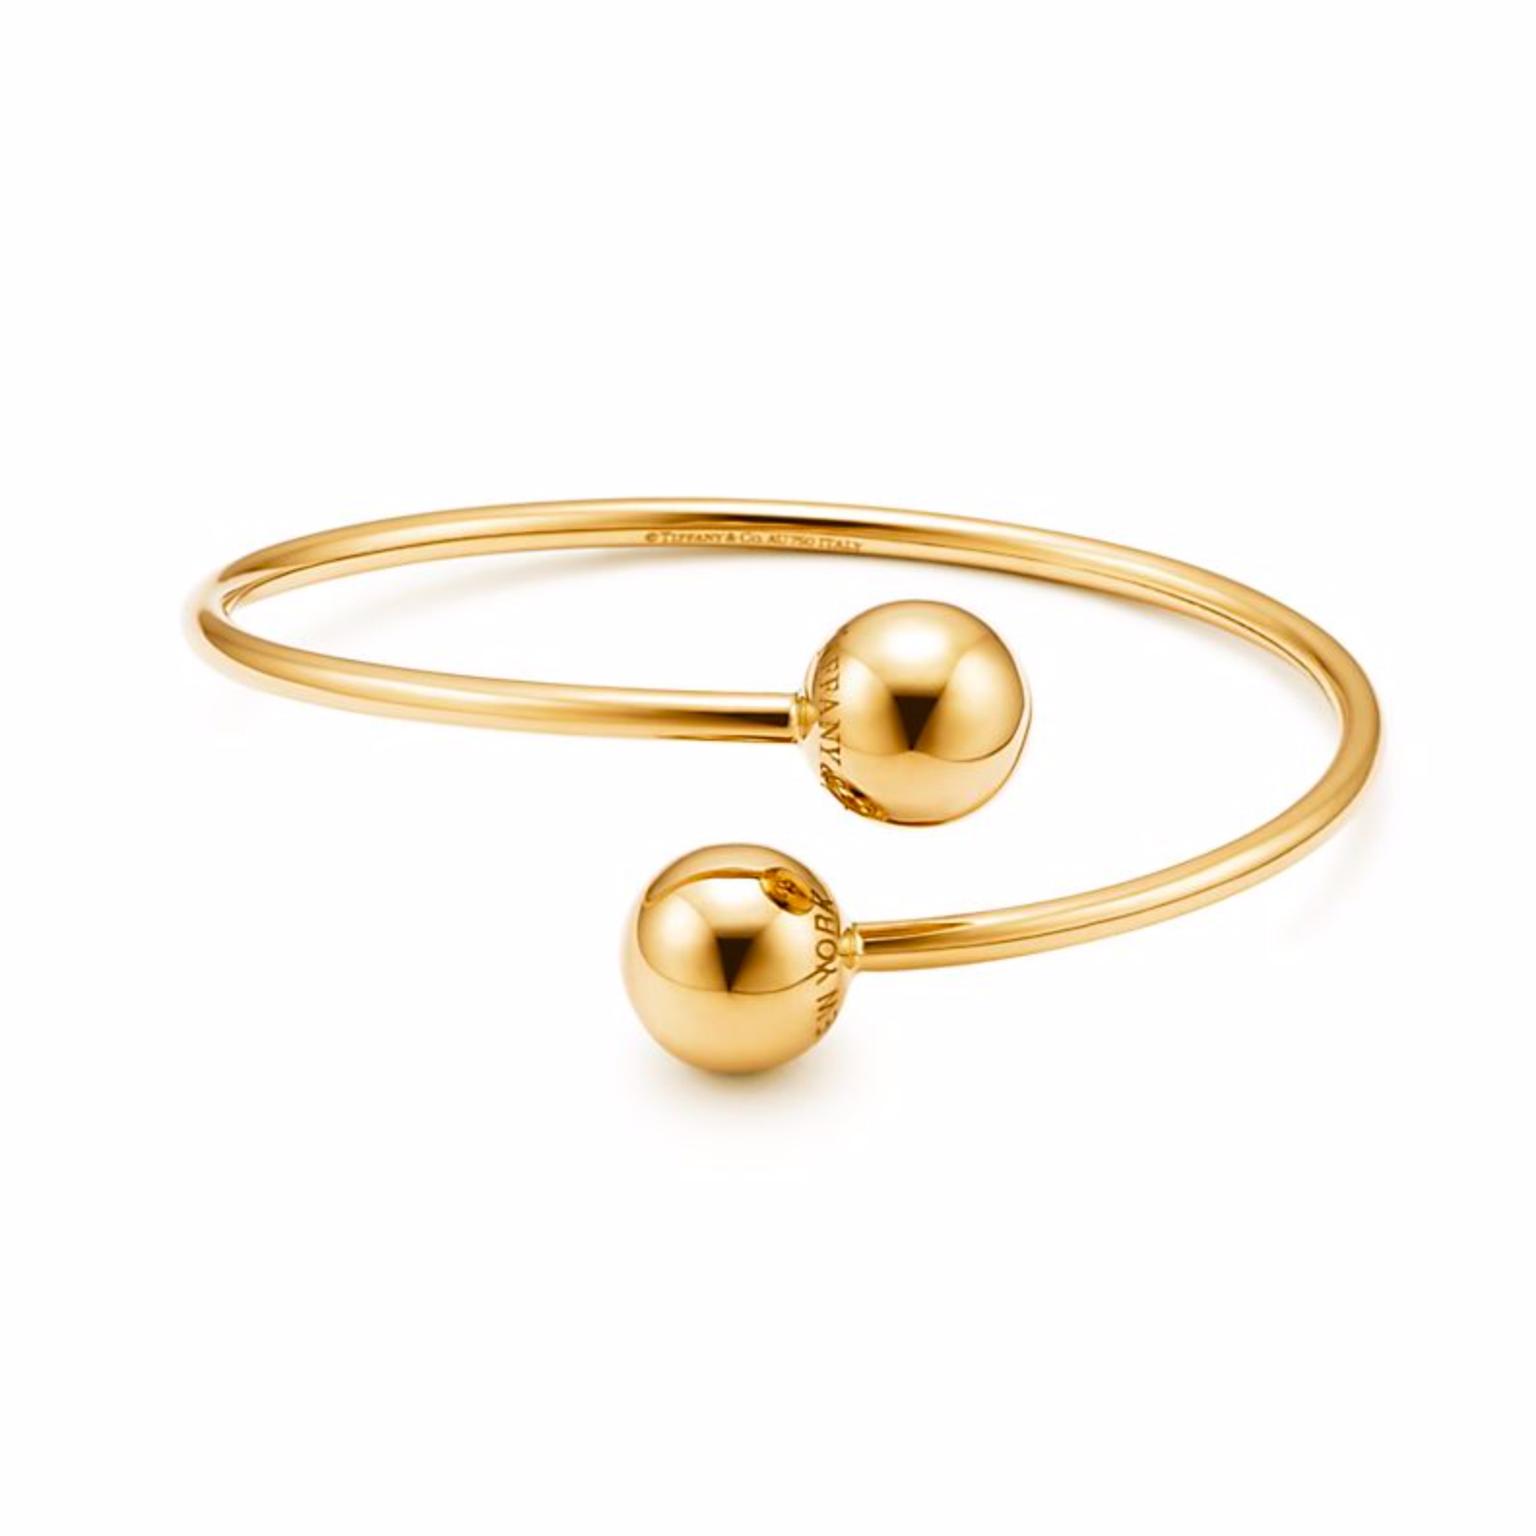 Tiffany City Hardwear Ball Bypass gold bracelet